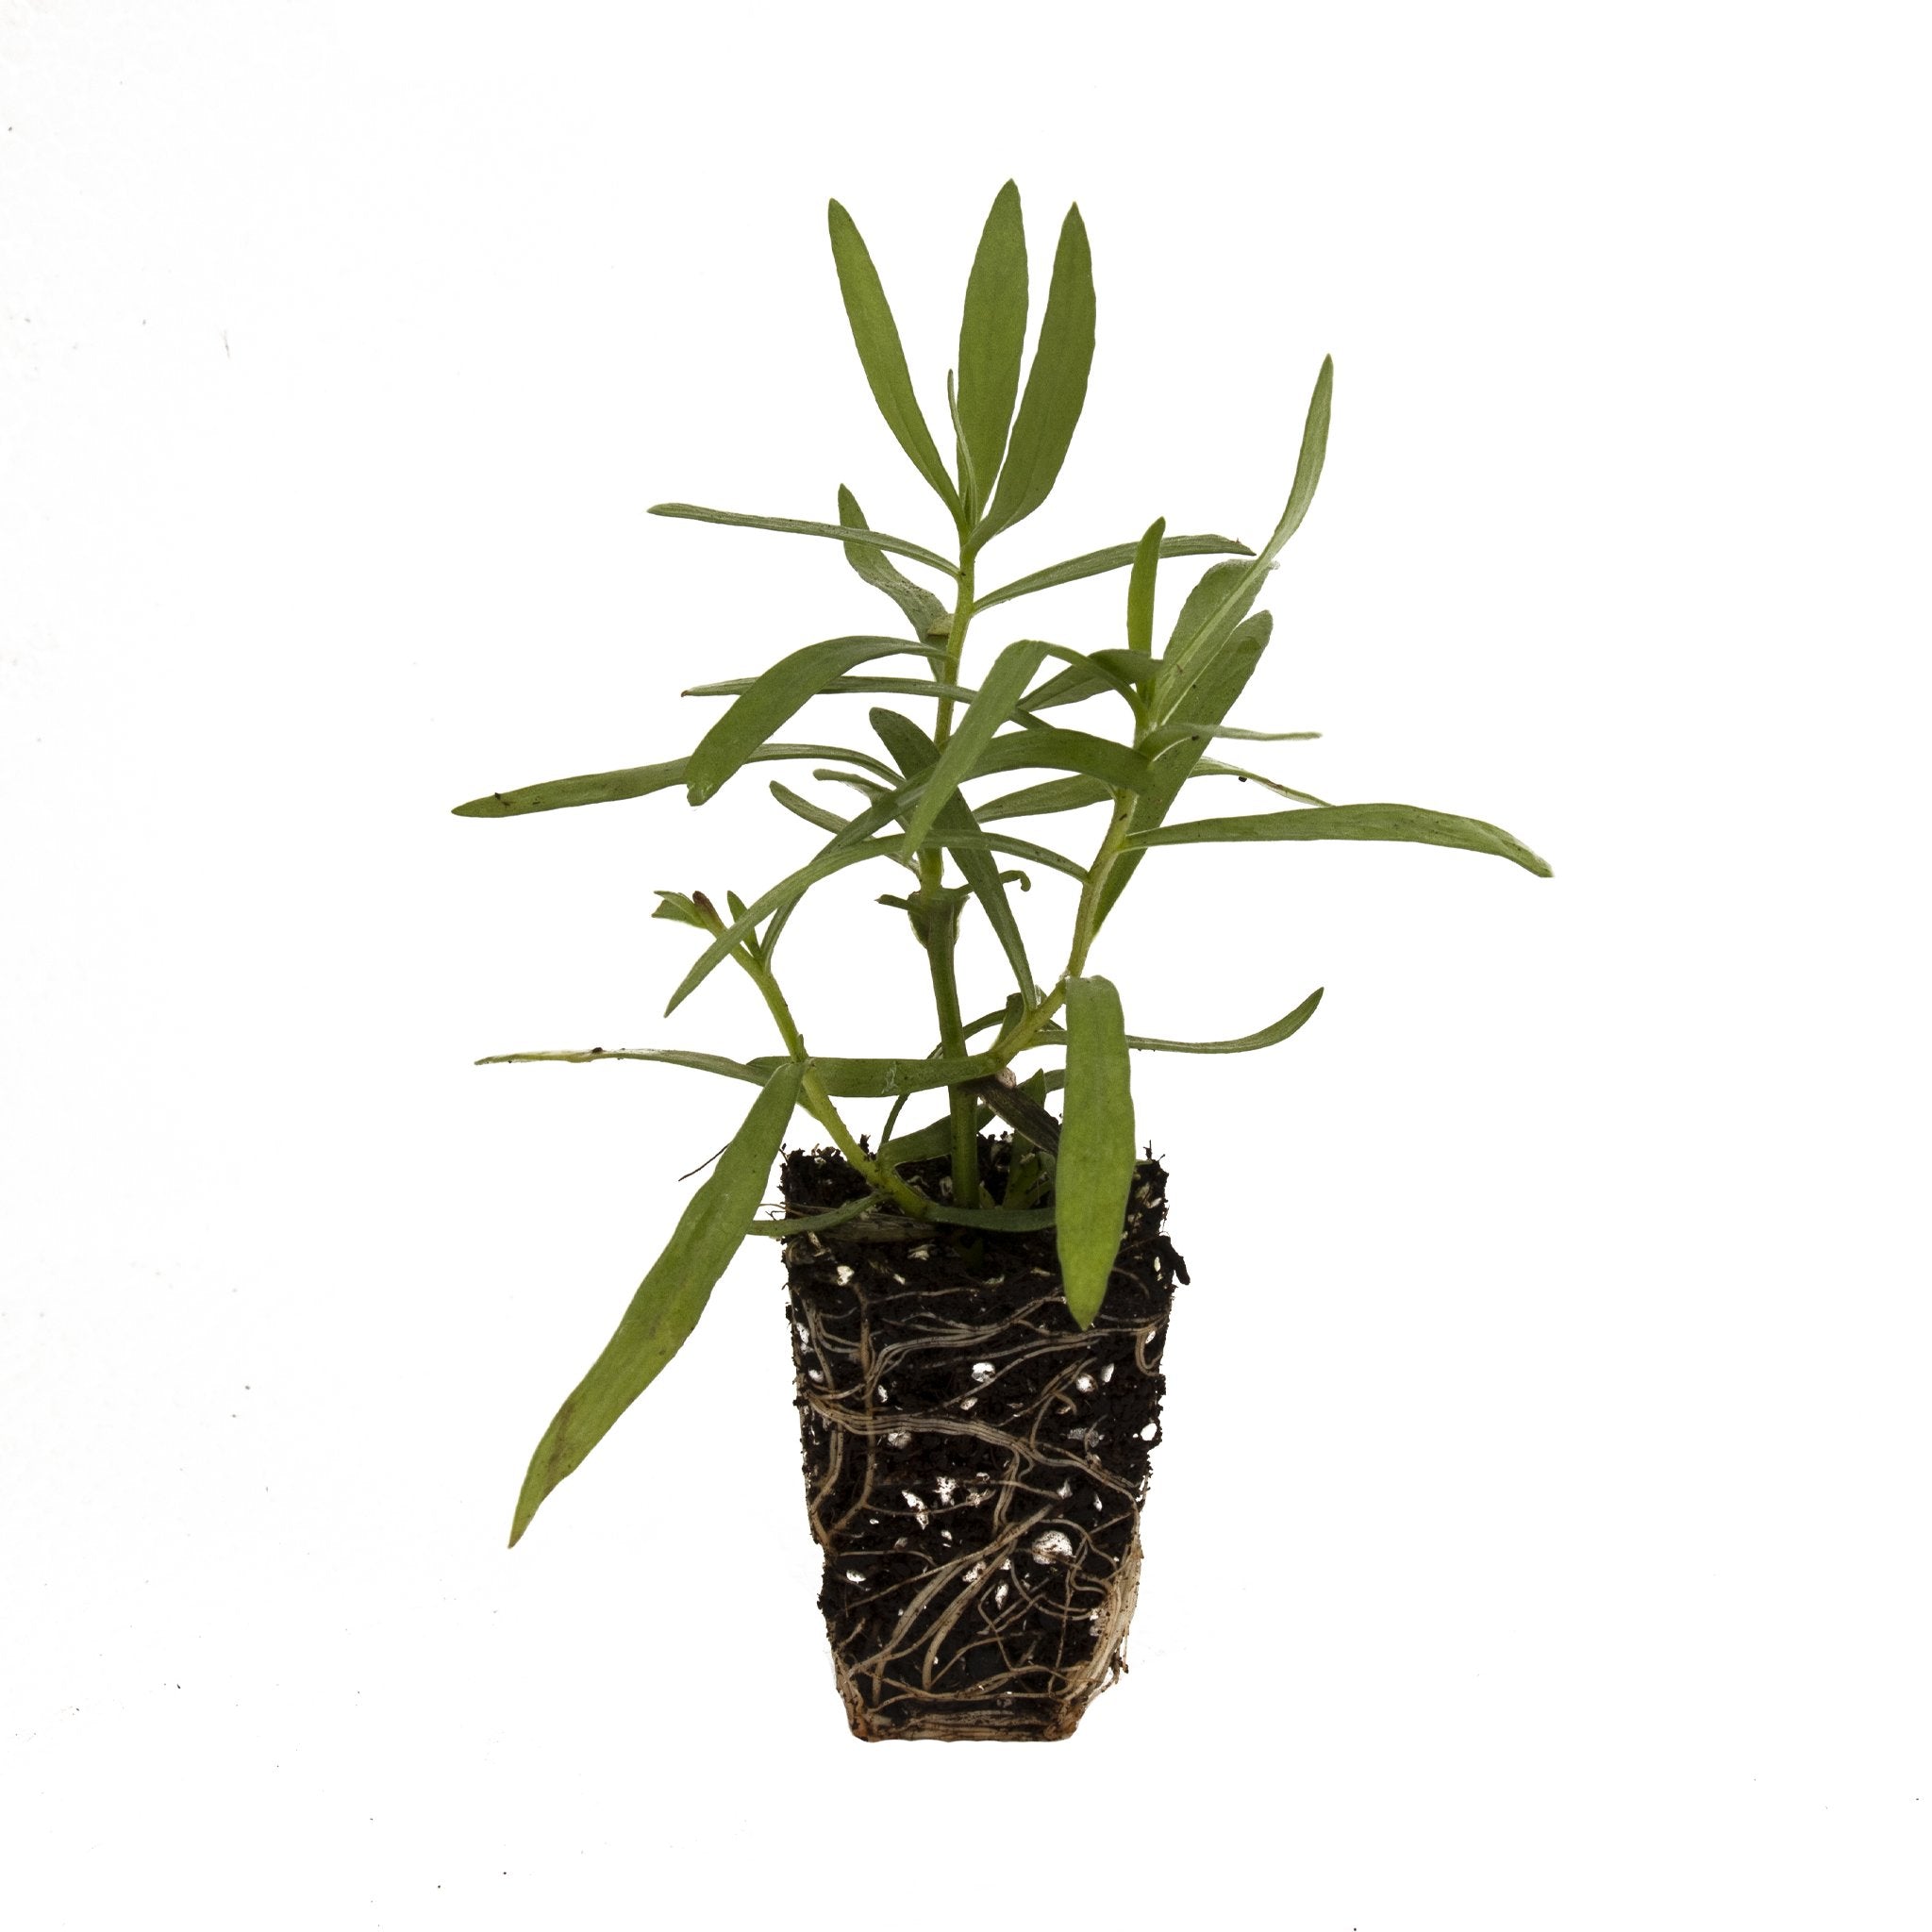 French Tarragon Herb Plant